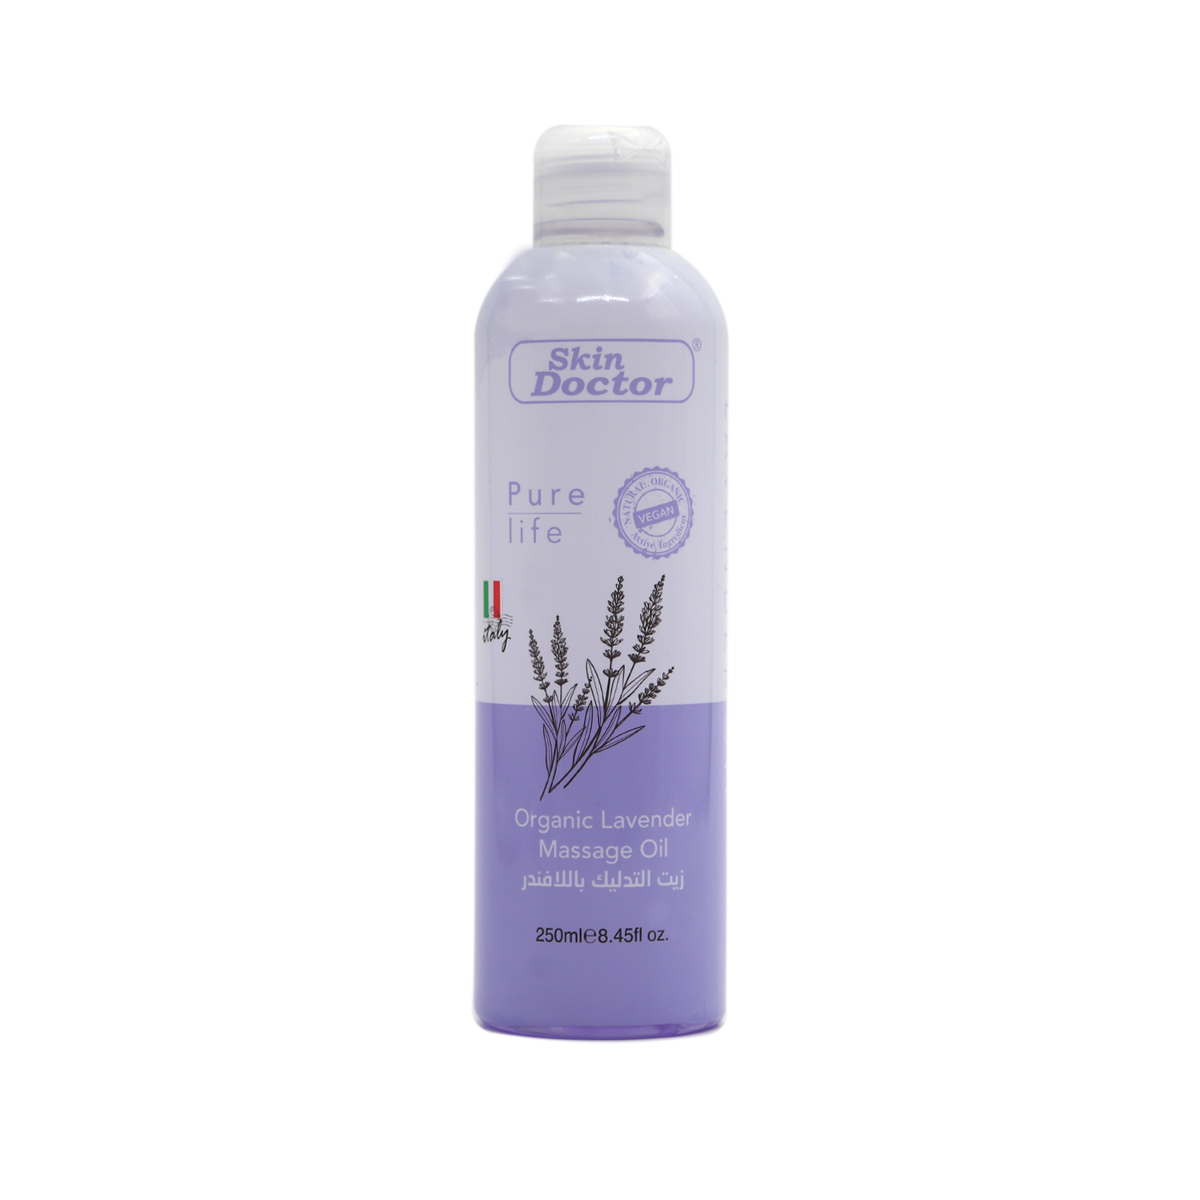 194-644216724499-SD-SKMO-499-Skin Doctor Organic Lavender Massage Oil 250ml